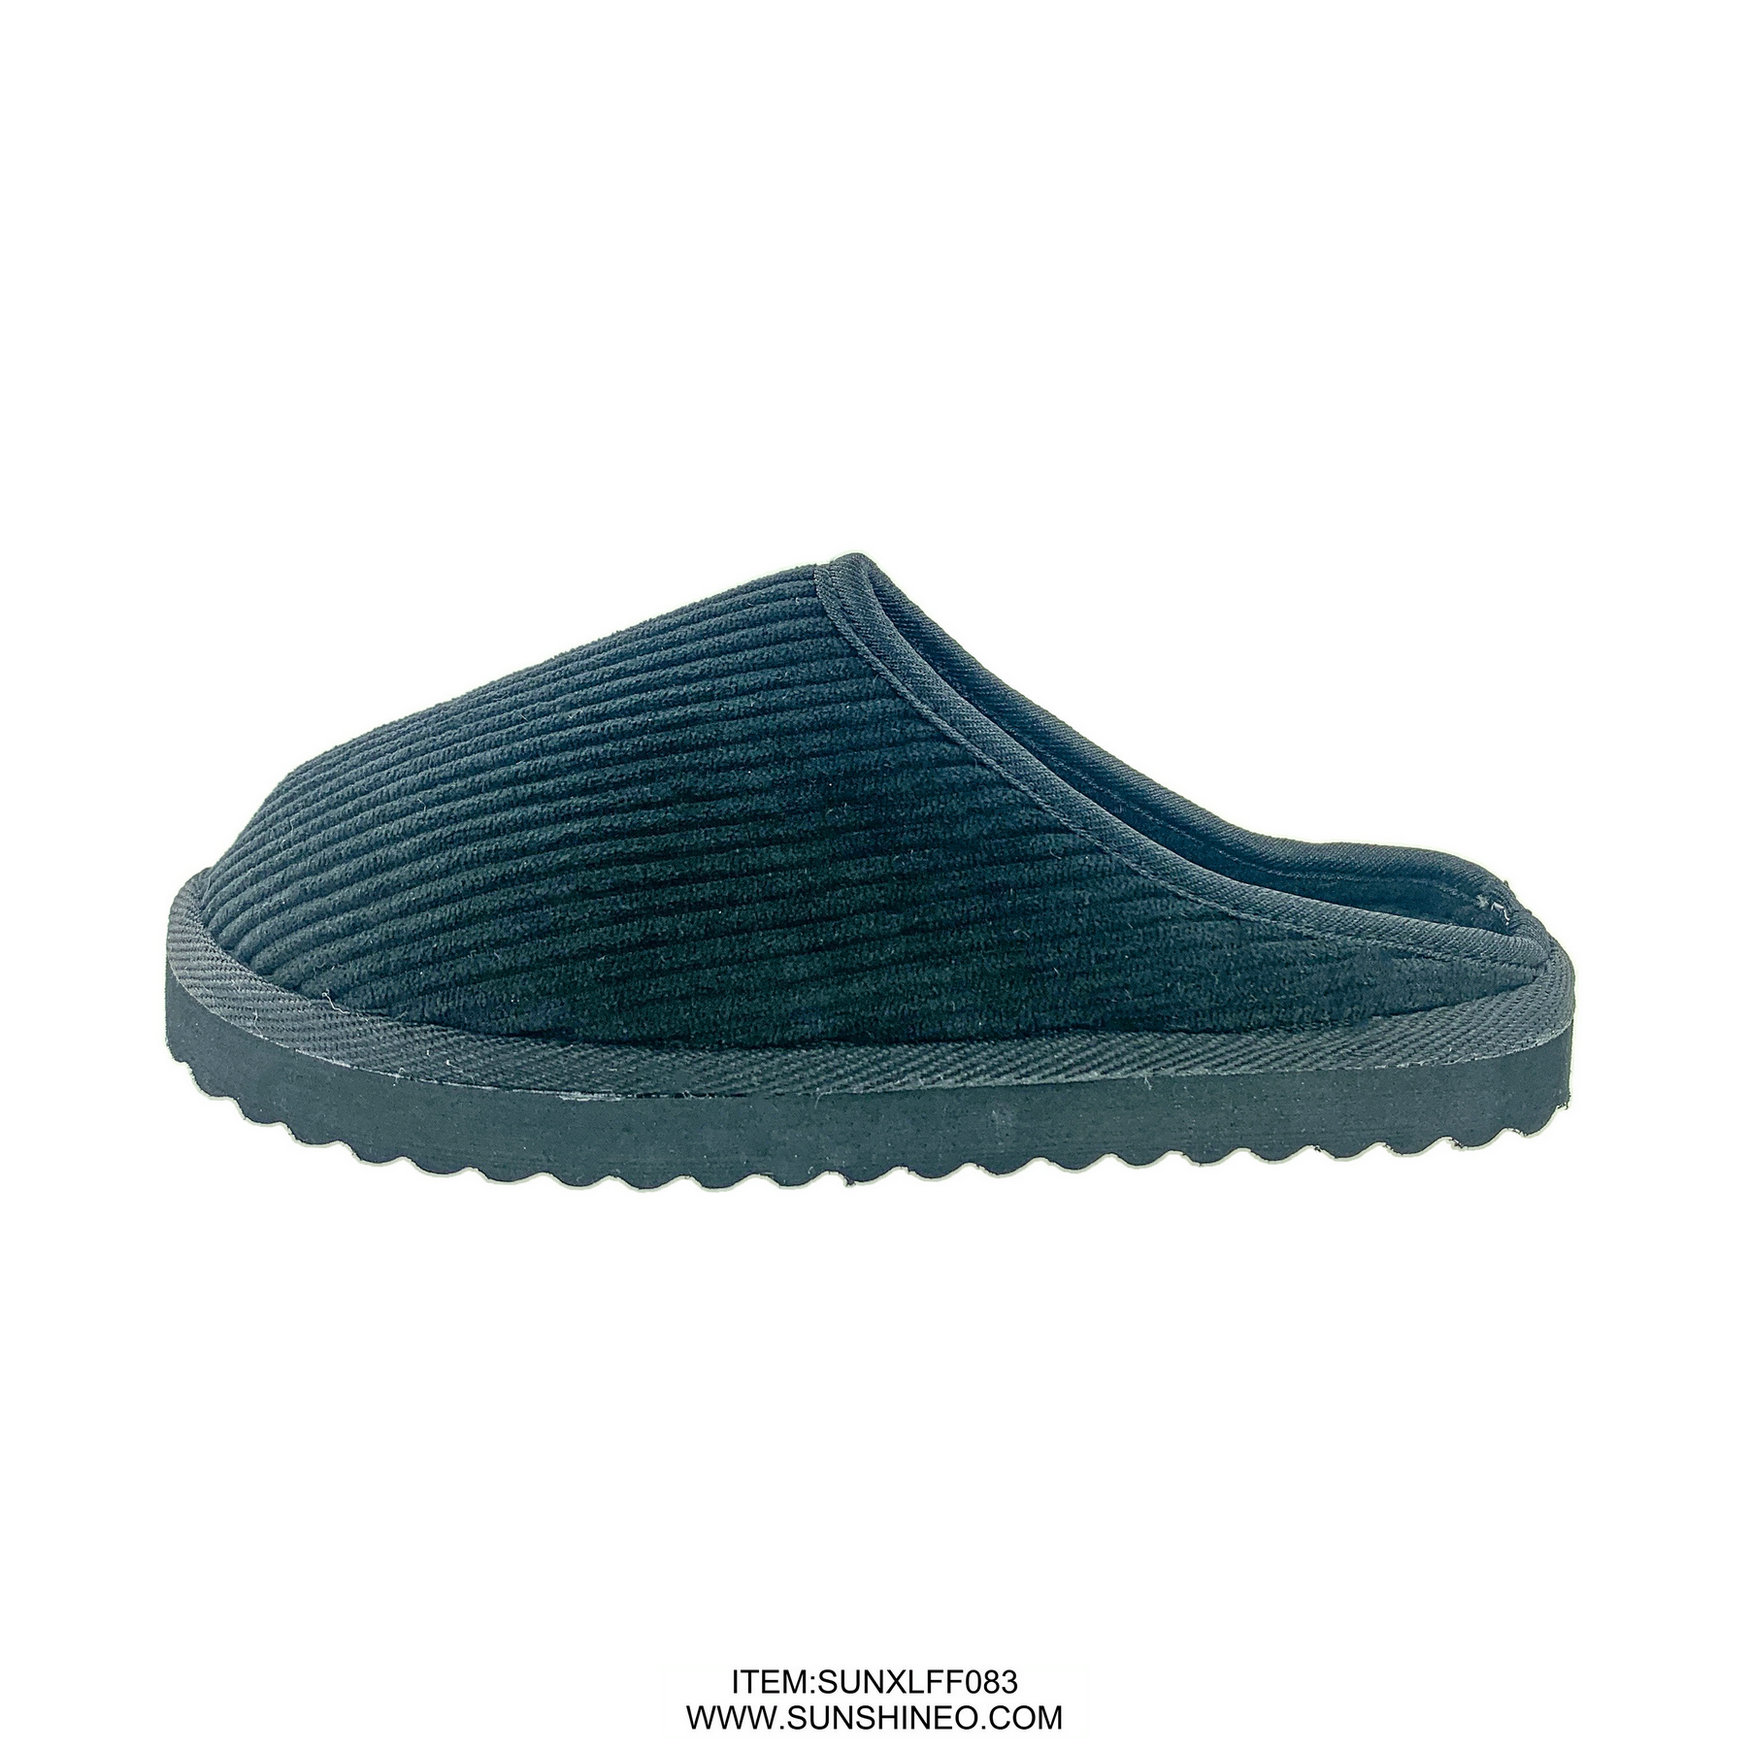 SUNXLFF083 fur flip flop sandals winter slippers